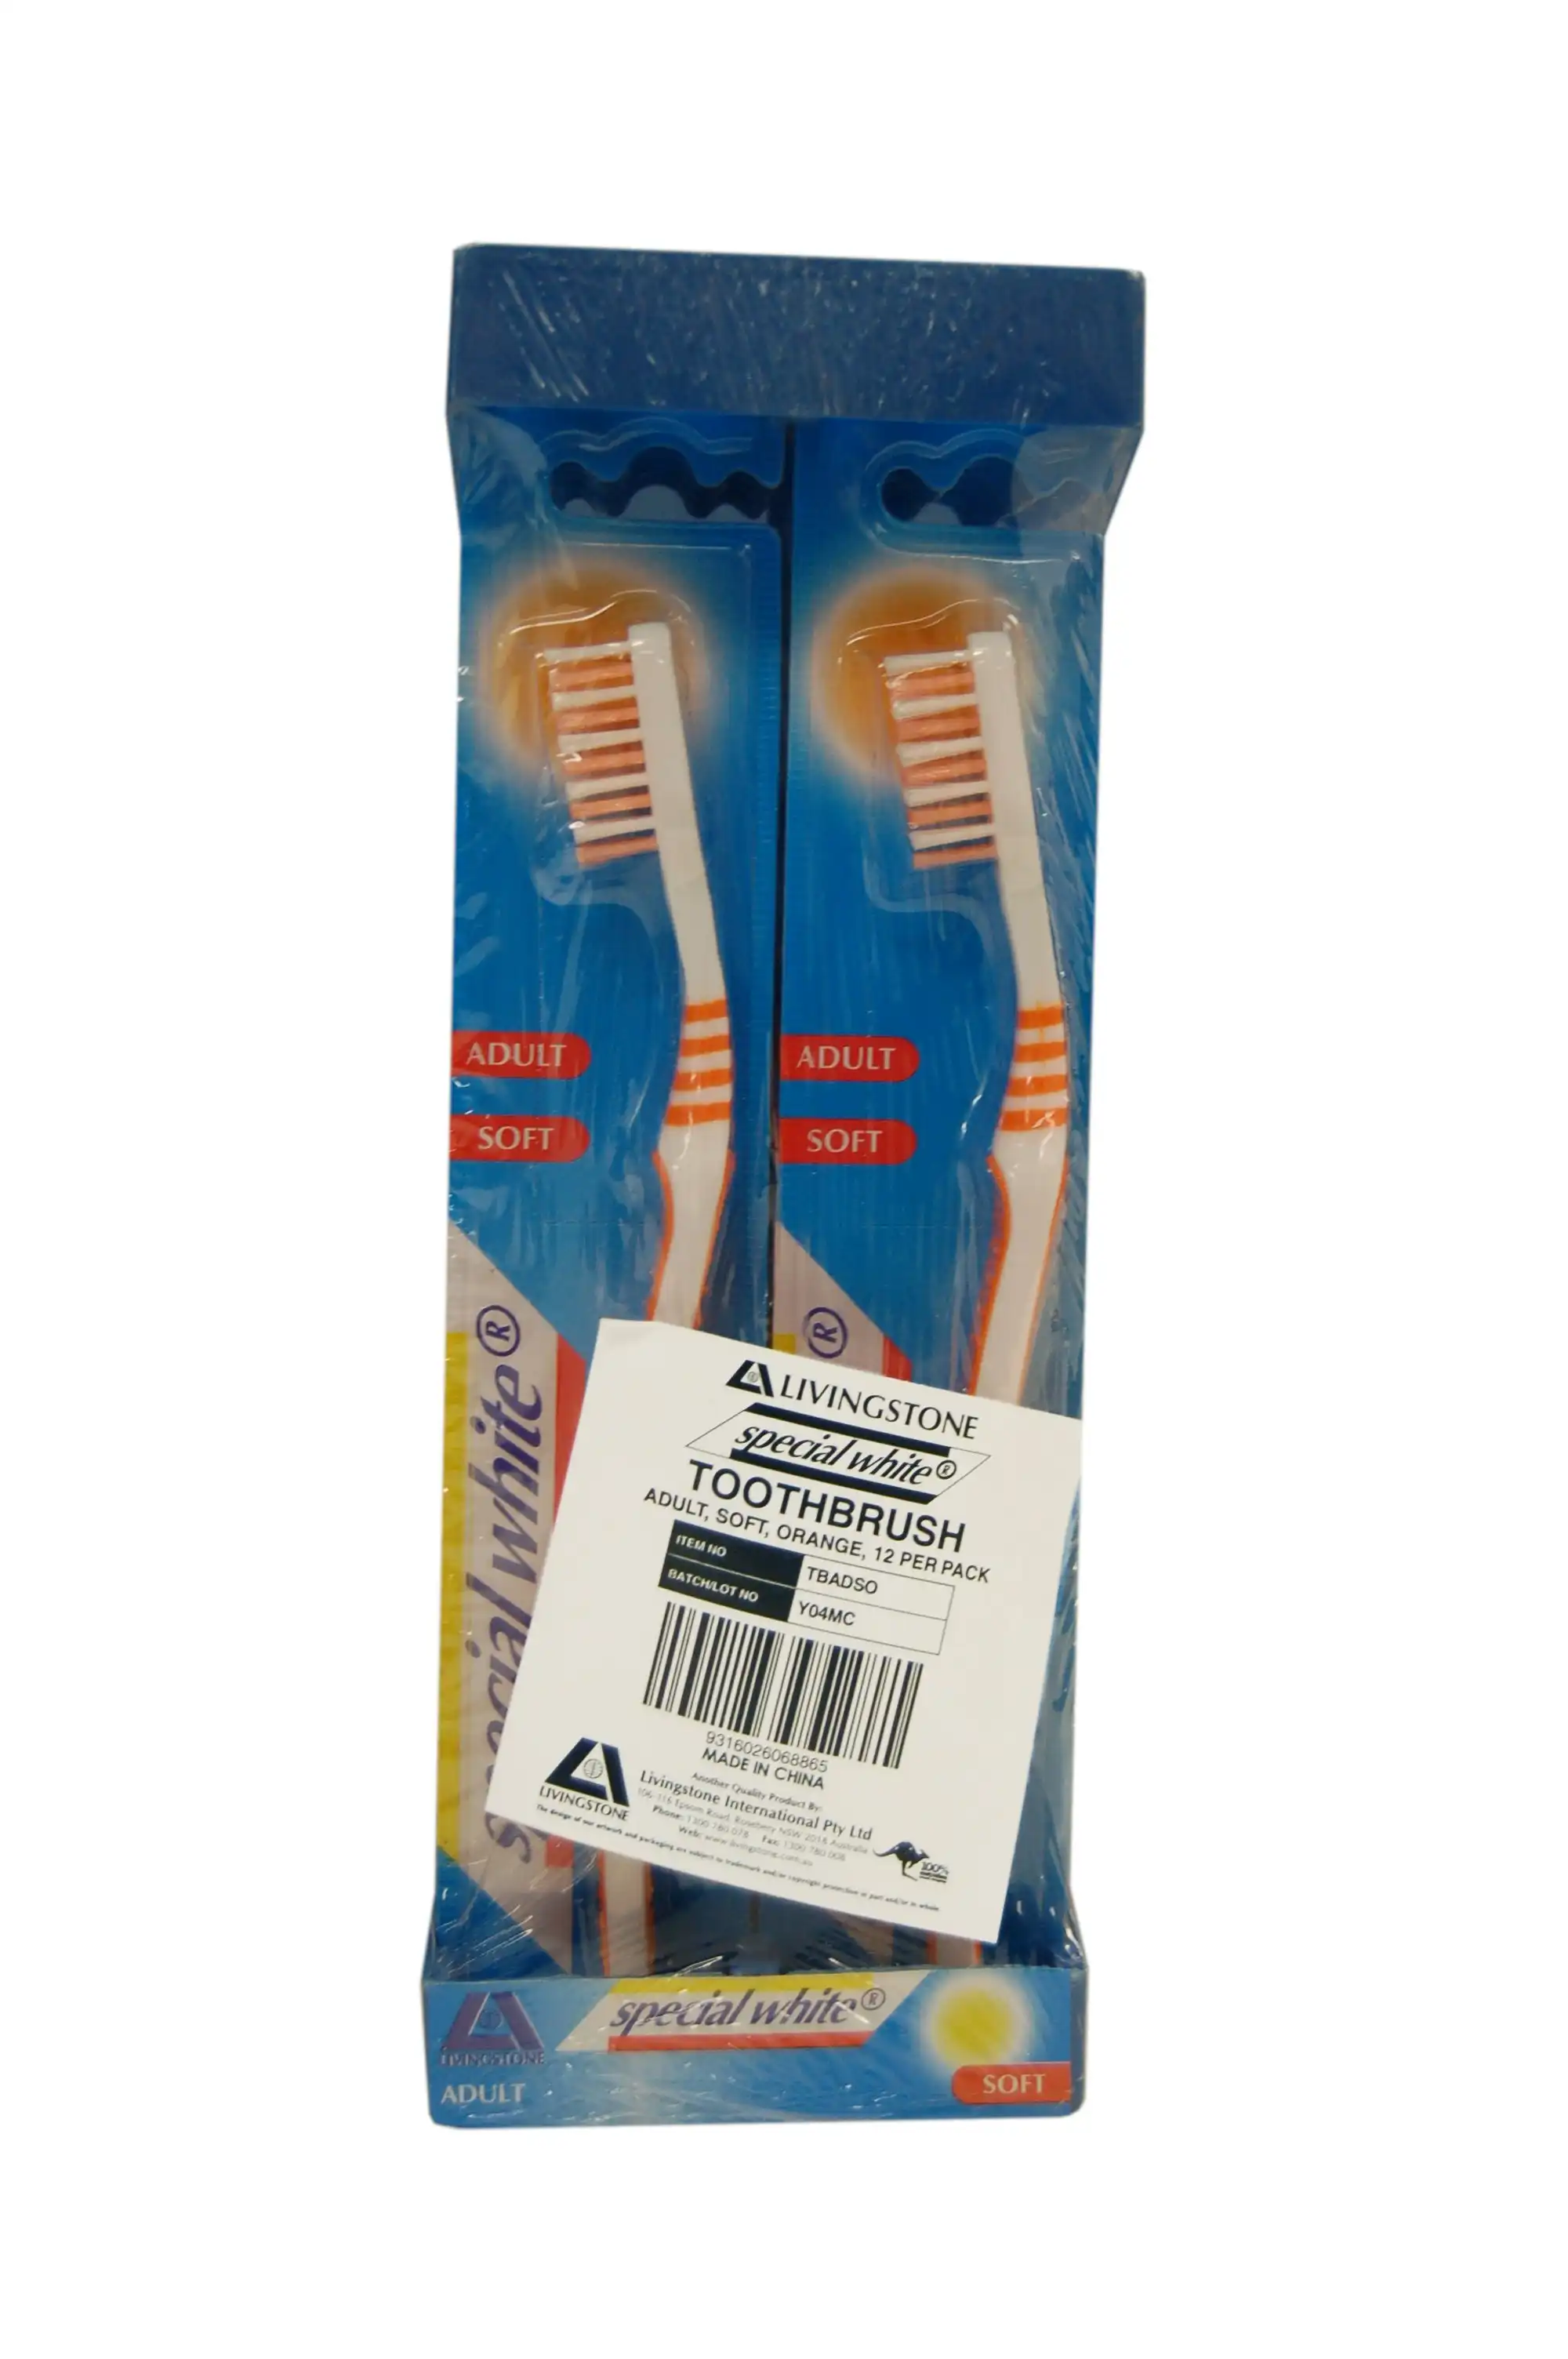 Livingstone Special White Toothbrush Adult Soft Bristles Orange 12 Pack